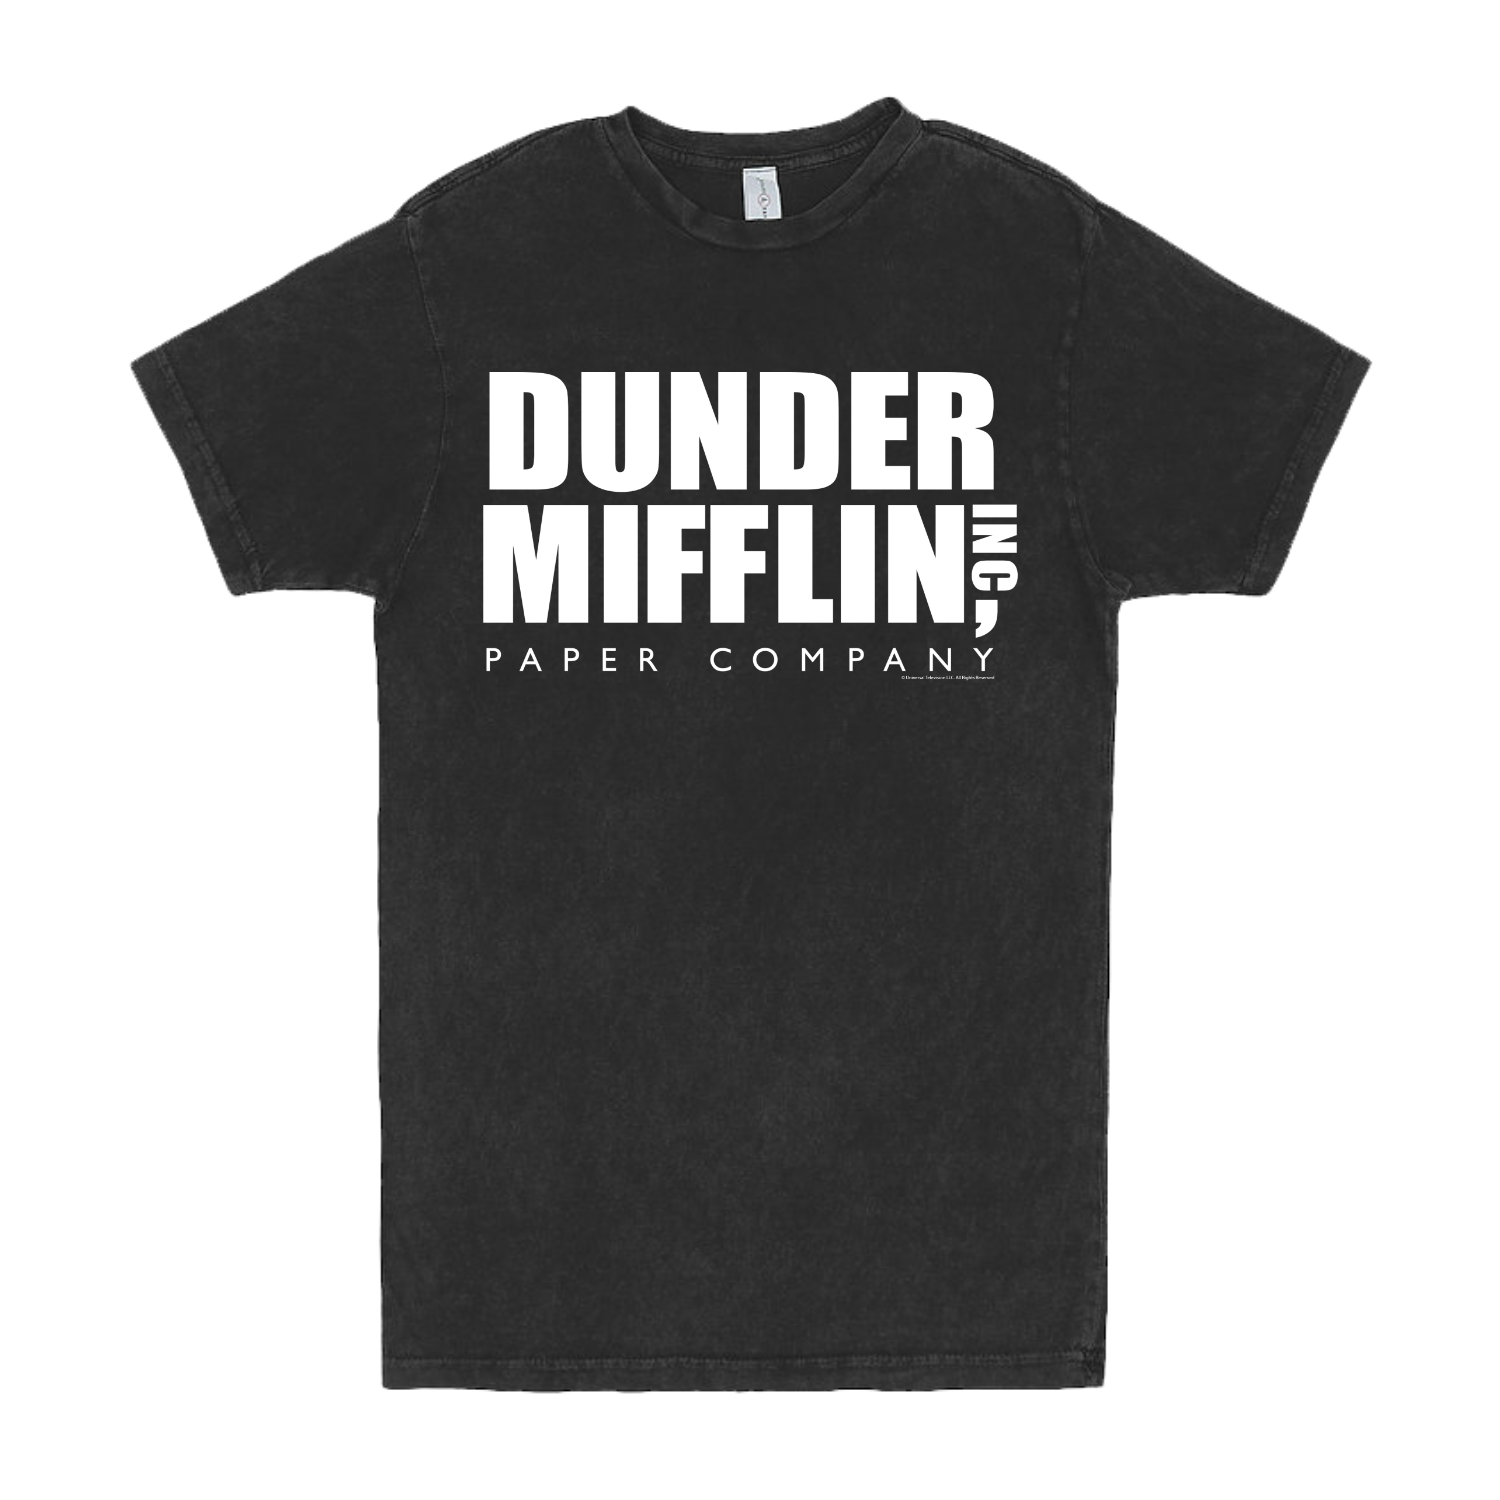 The Office Sign – Dunder Mifflin Logo – The Office Merchandise